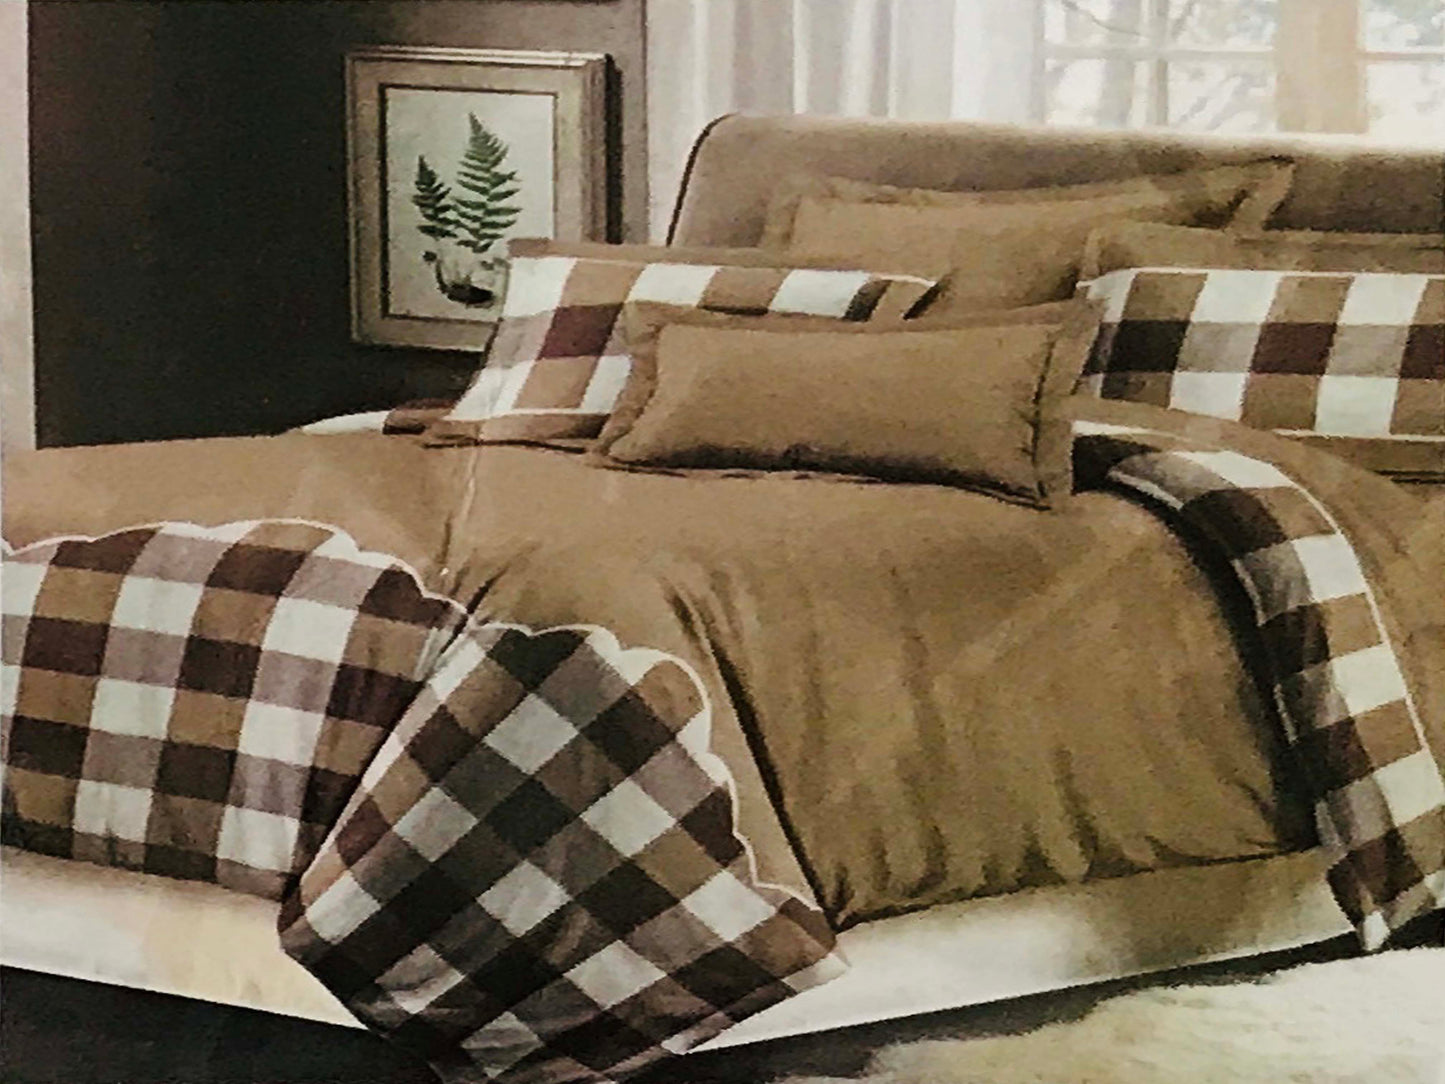 Quilted Bedspread Throw Comforter Bedding Sets Checks BEIGE